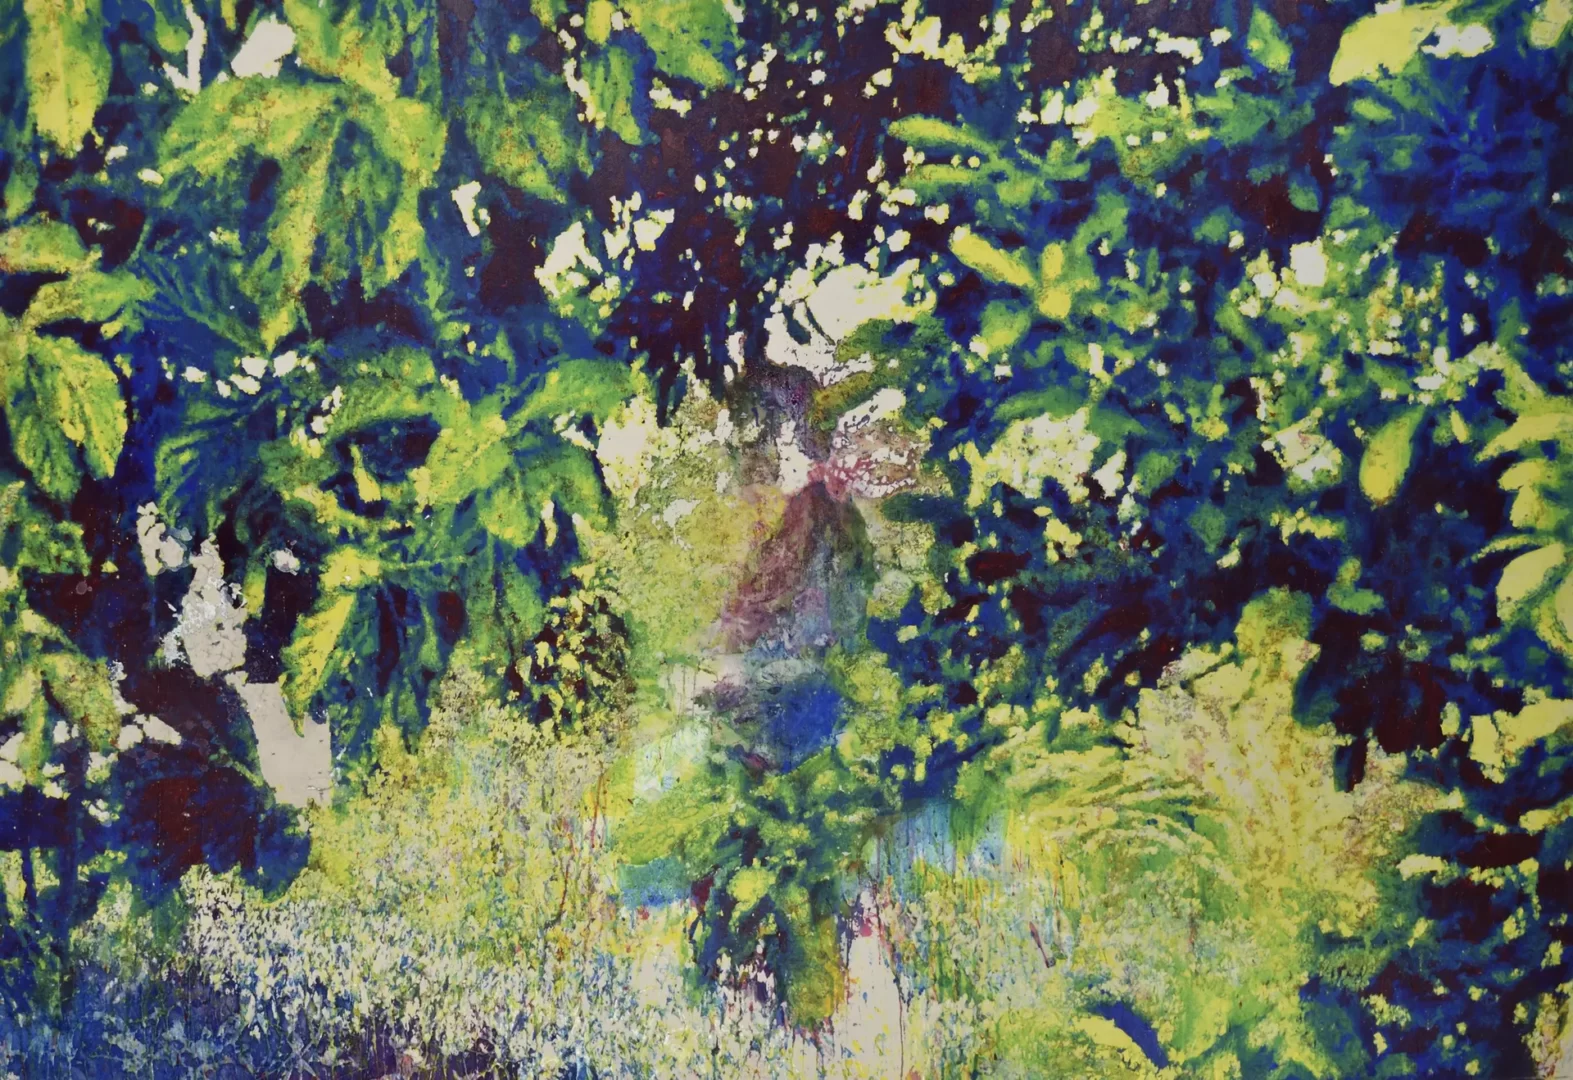 Alexandre Lenoir's Petite jungle